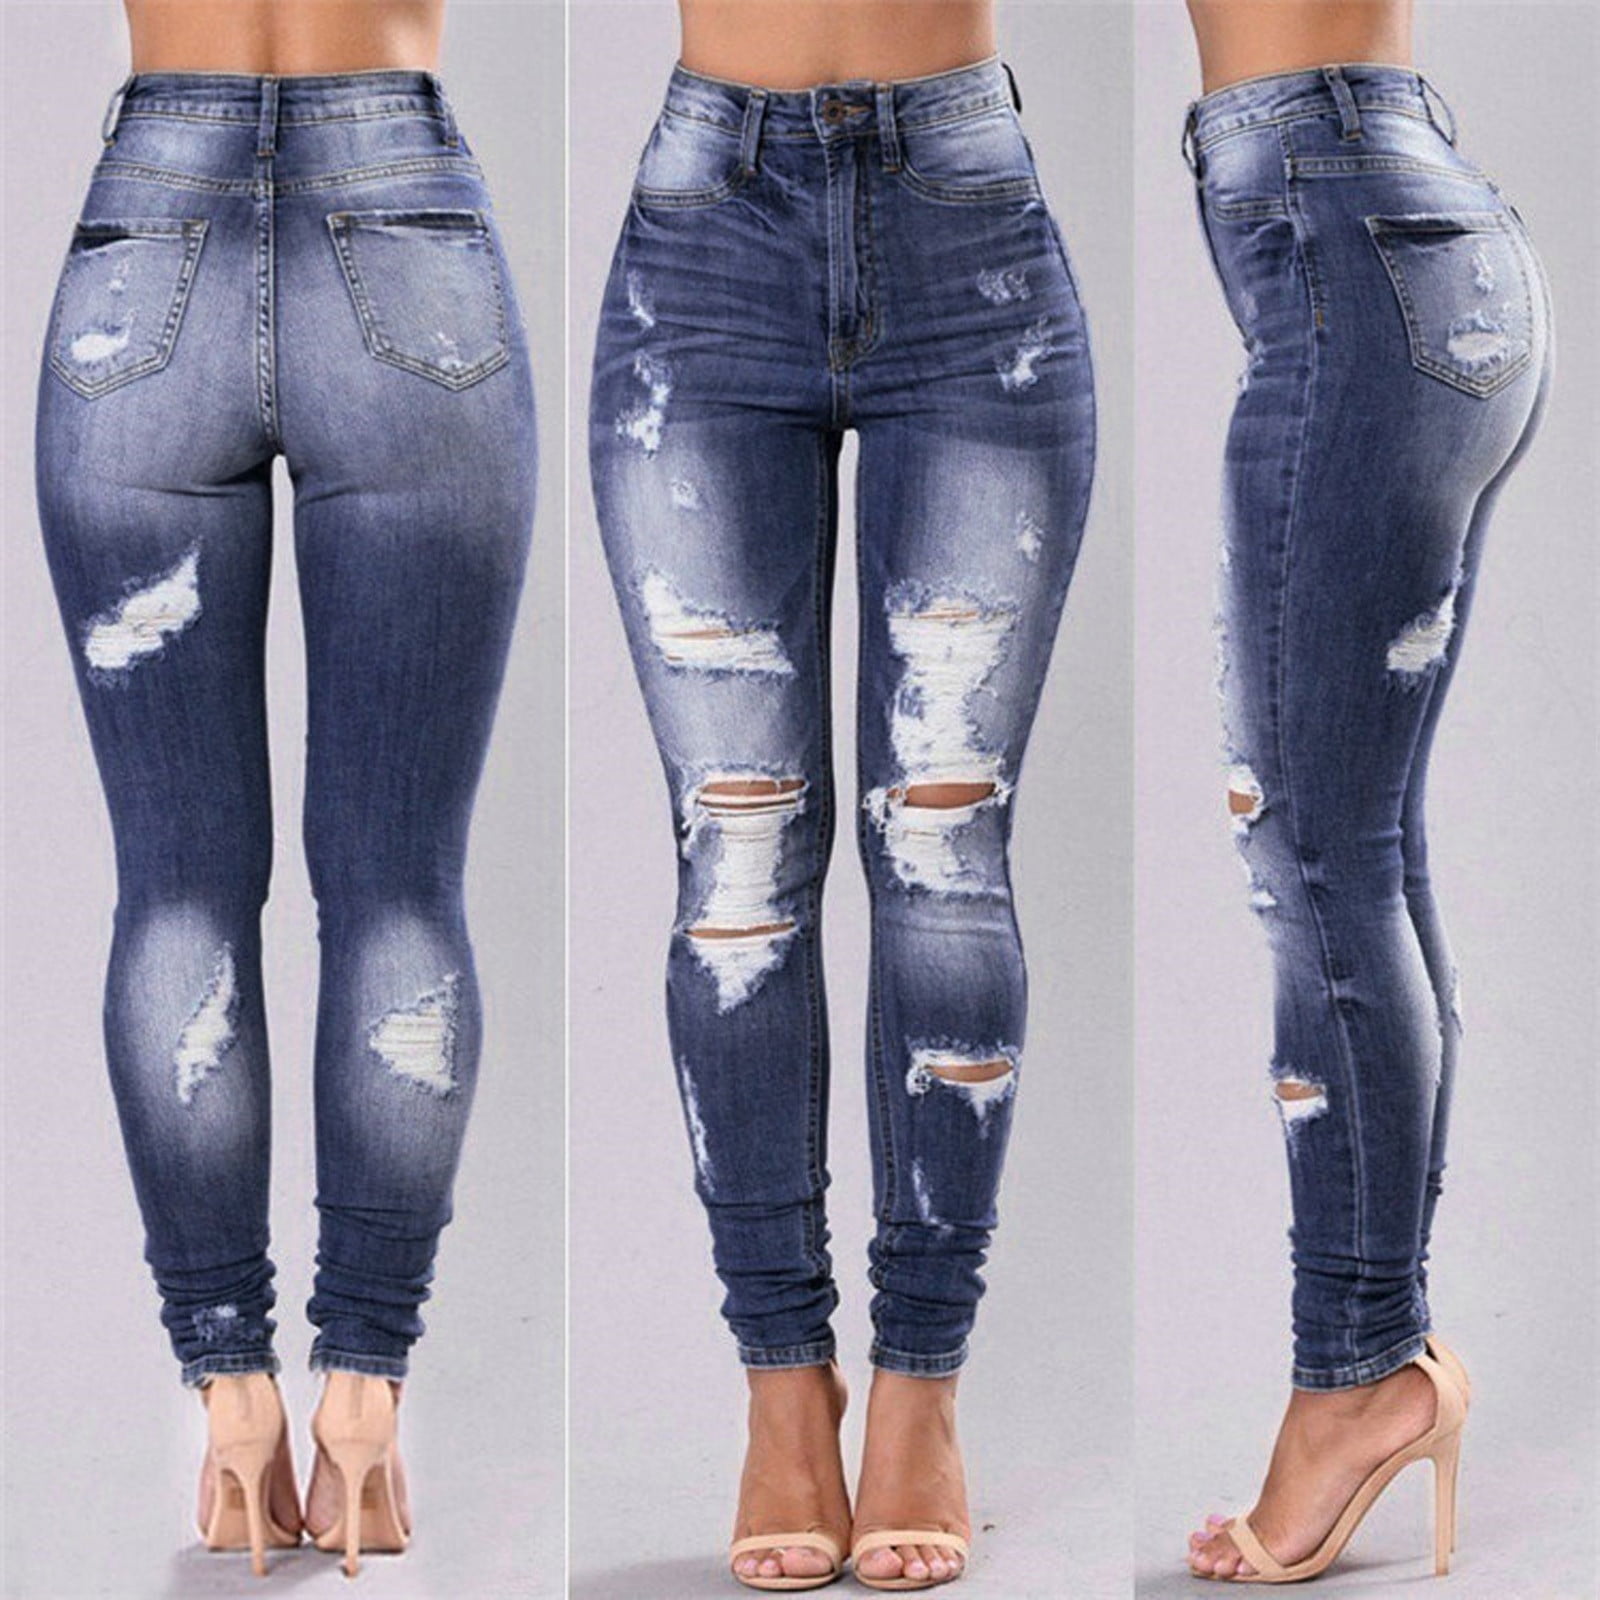 YOTAMI Denim Jeans Pants Mid Rise Ripped Denim Jeans Fashion under $15 Curvy Skinny Jeans Dark Blue S-6XL - Walmart.com